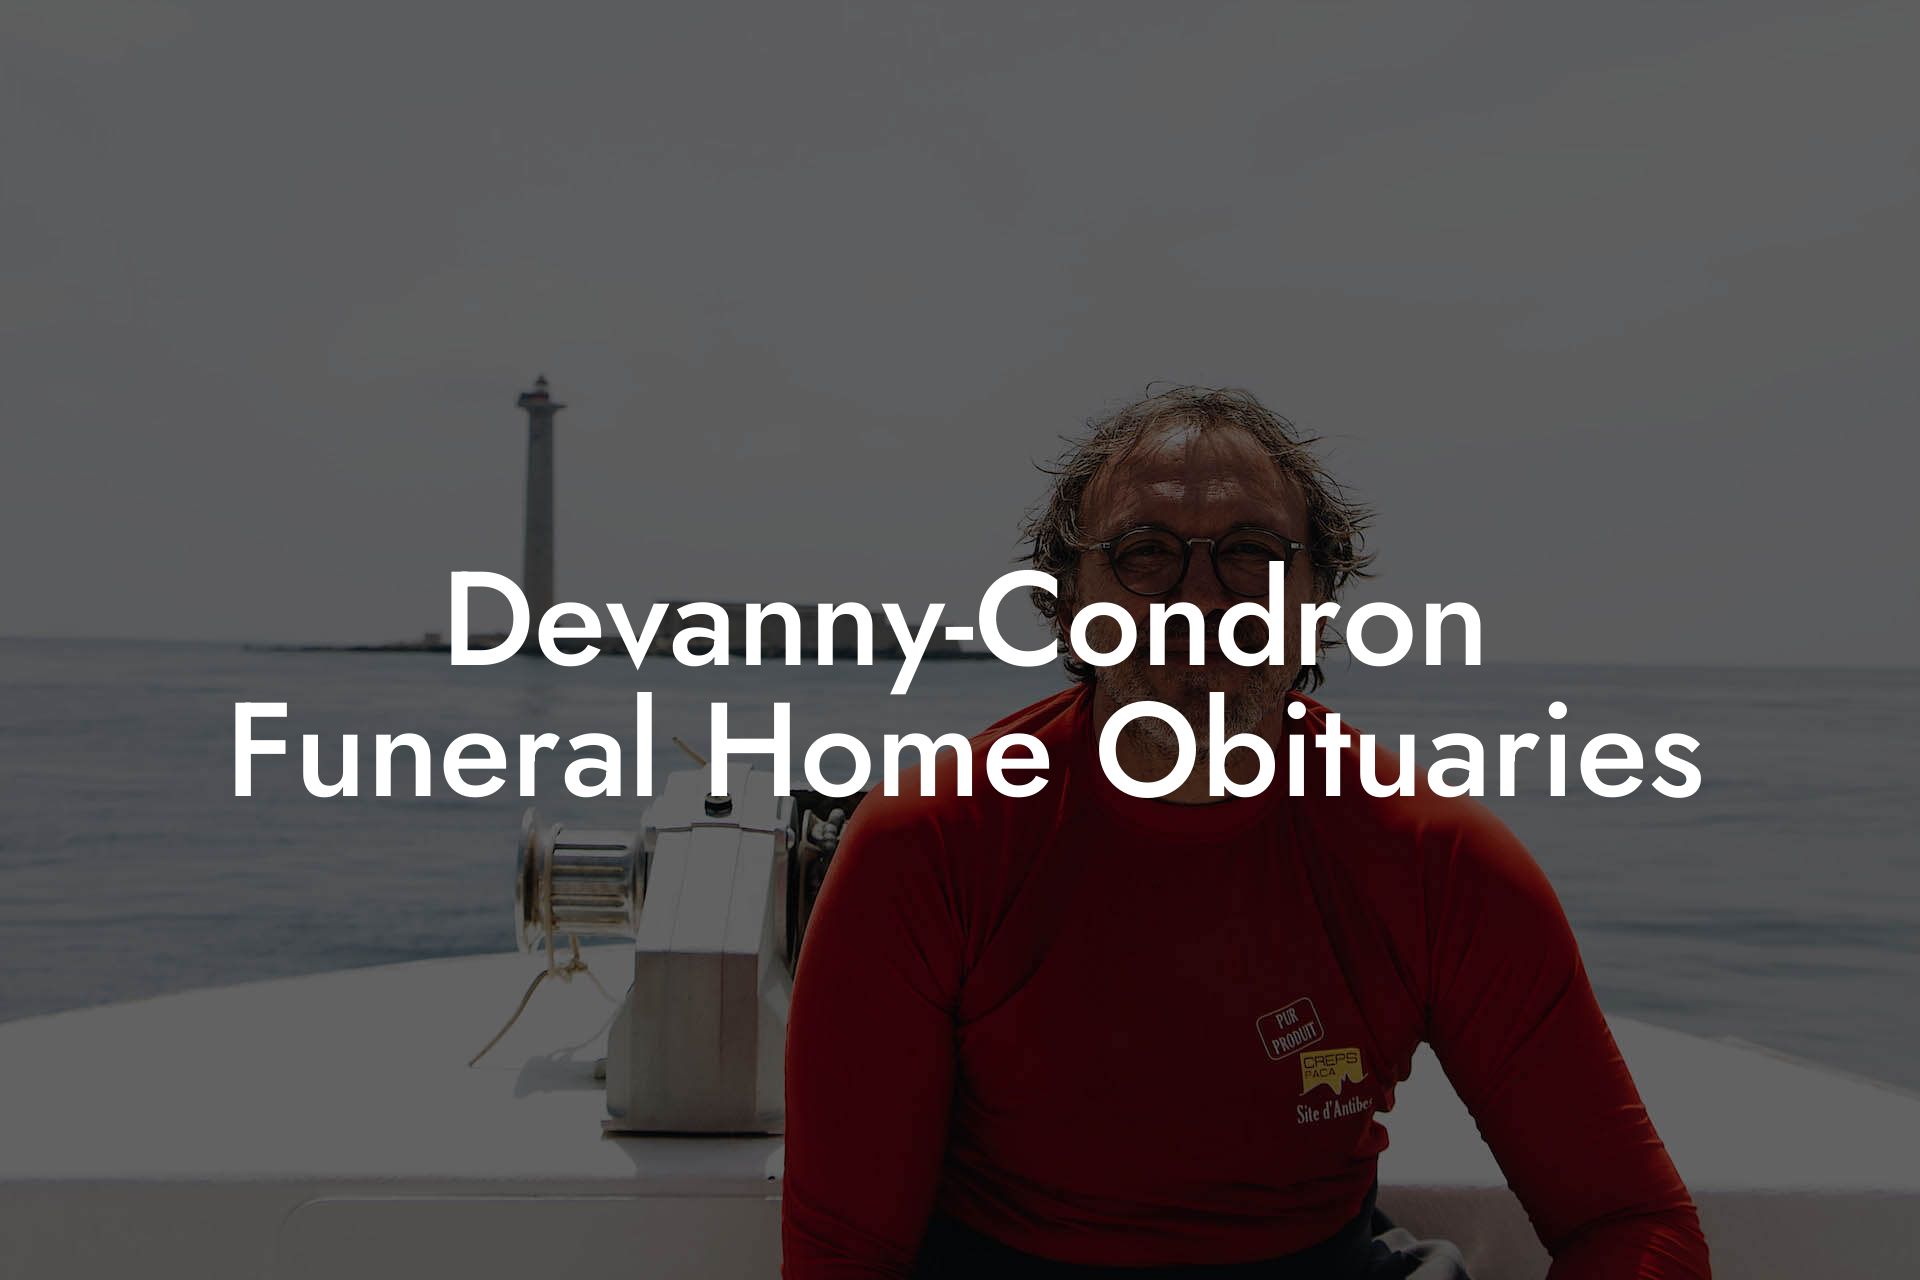 Devanny-Condron Funeral Home Obituaries